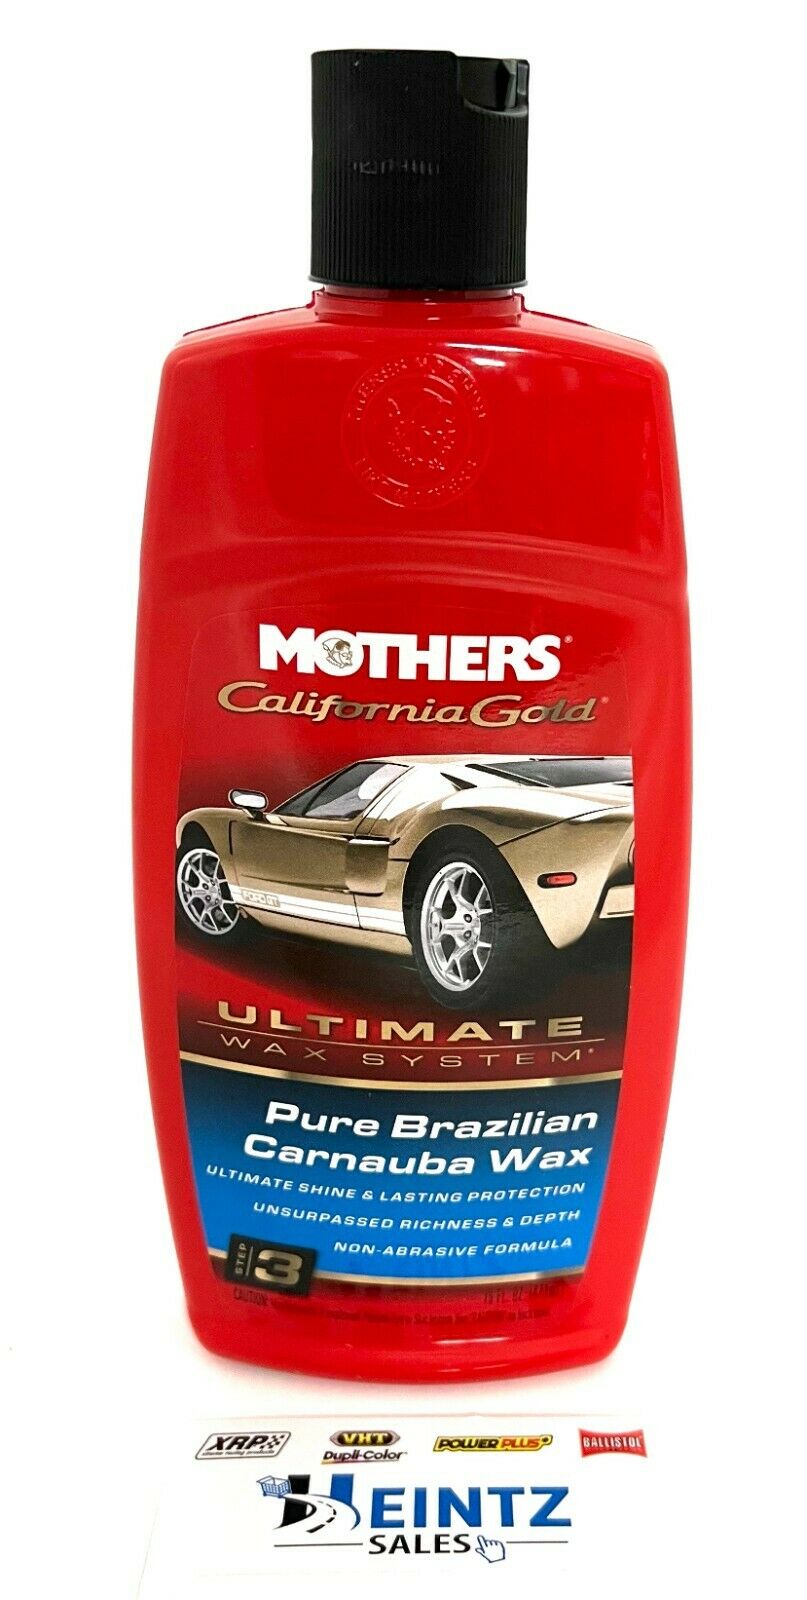 MOTHERS 05750 California Gold Pure Brazilian Carnauba Wax - Clean & Protect - 16 oz.